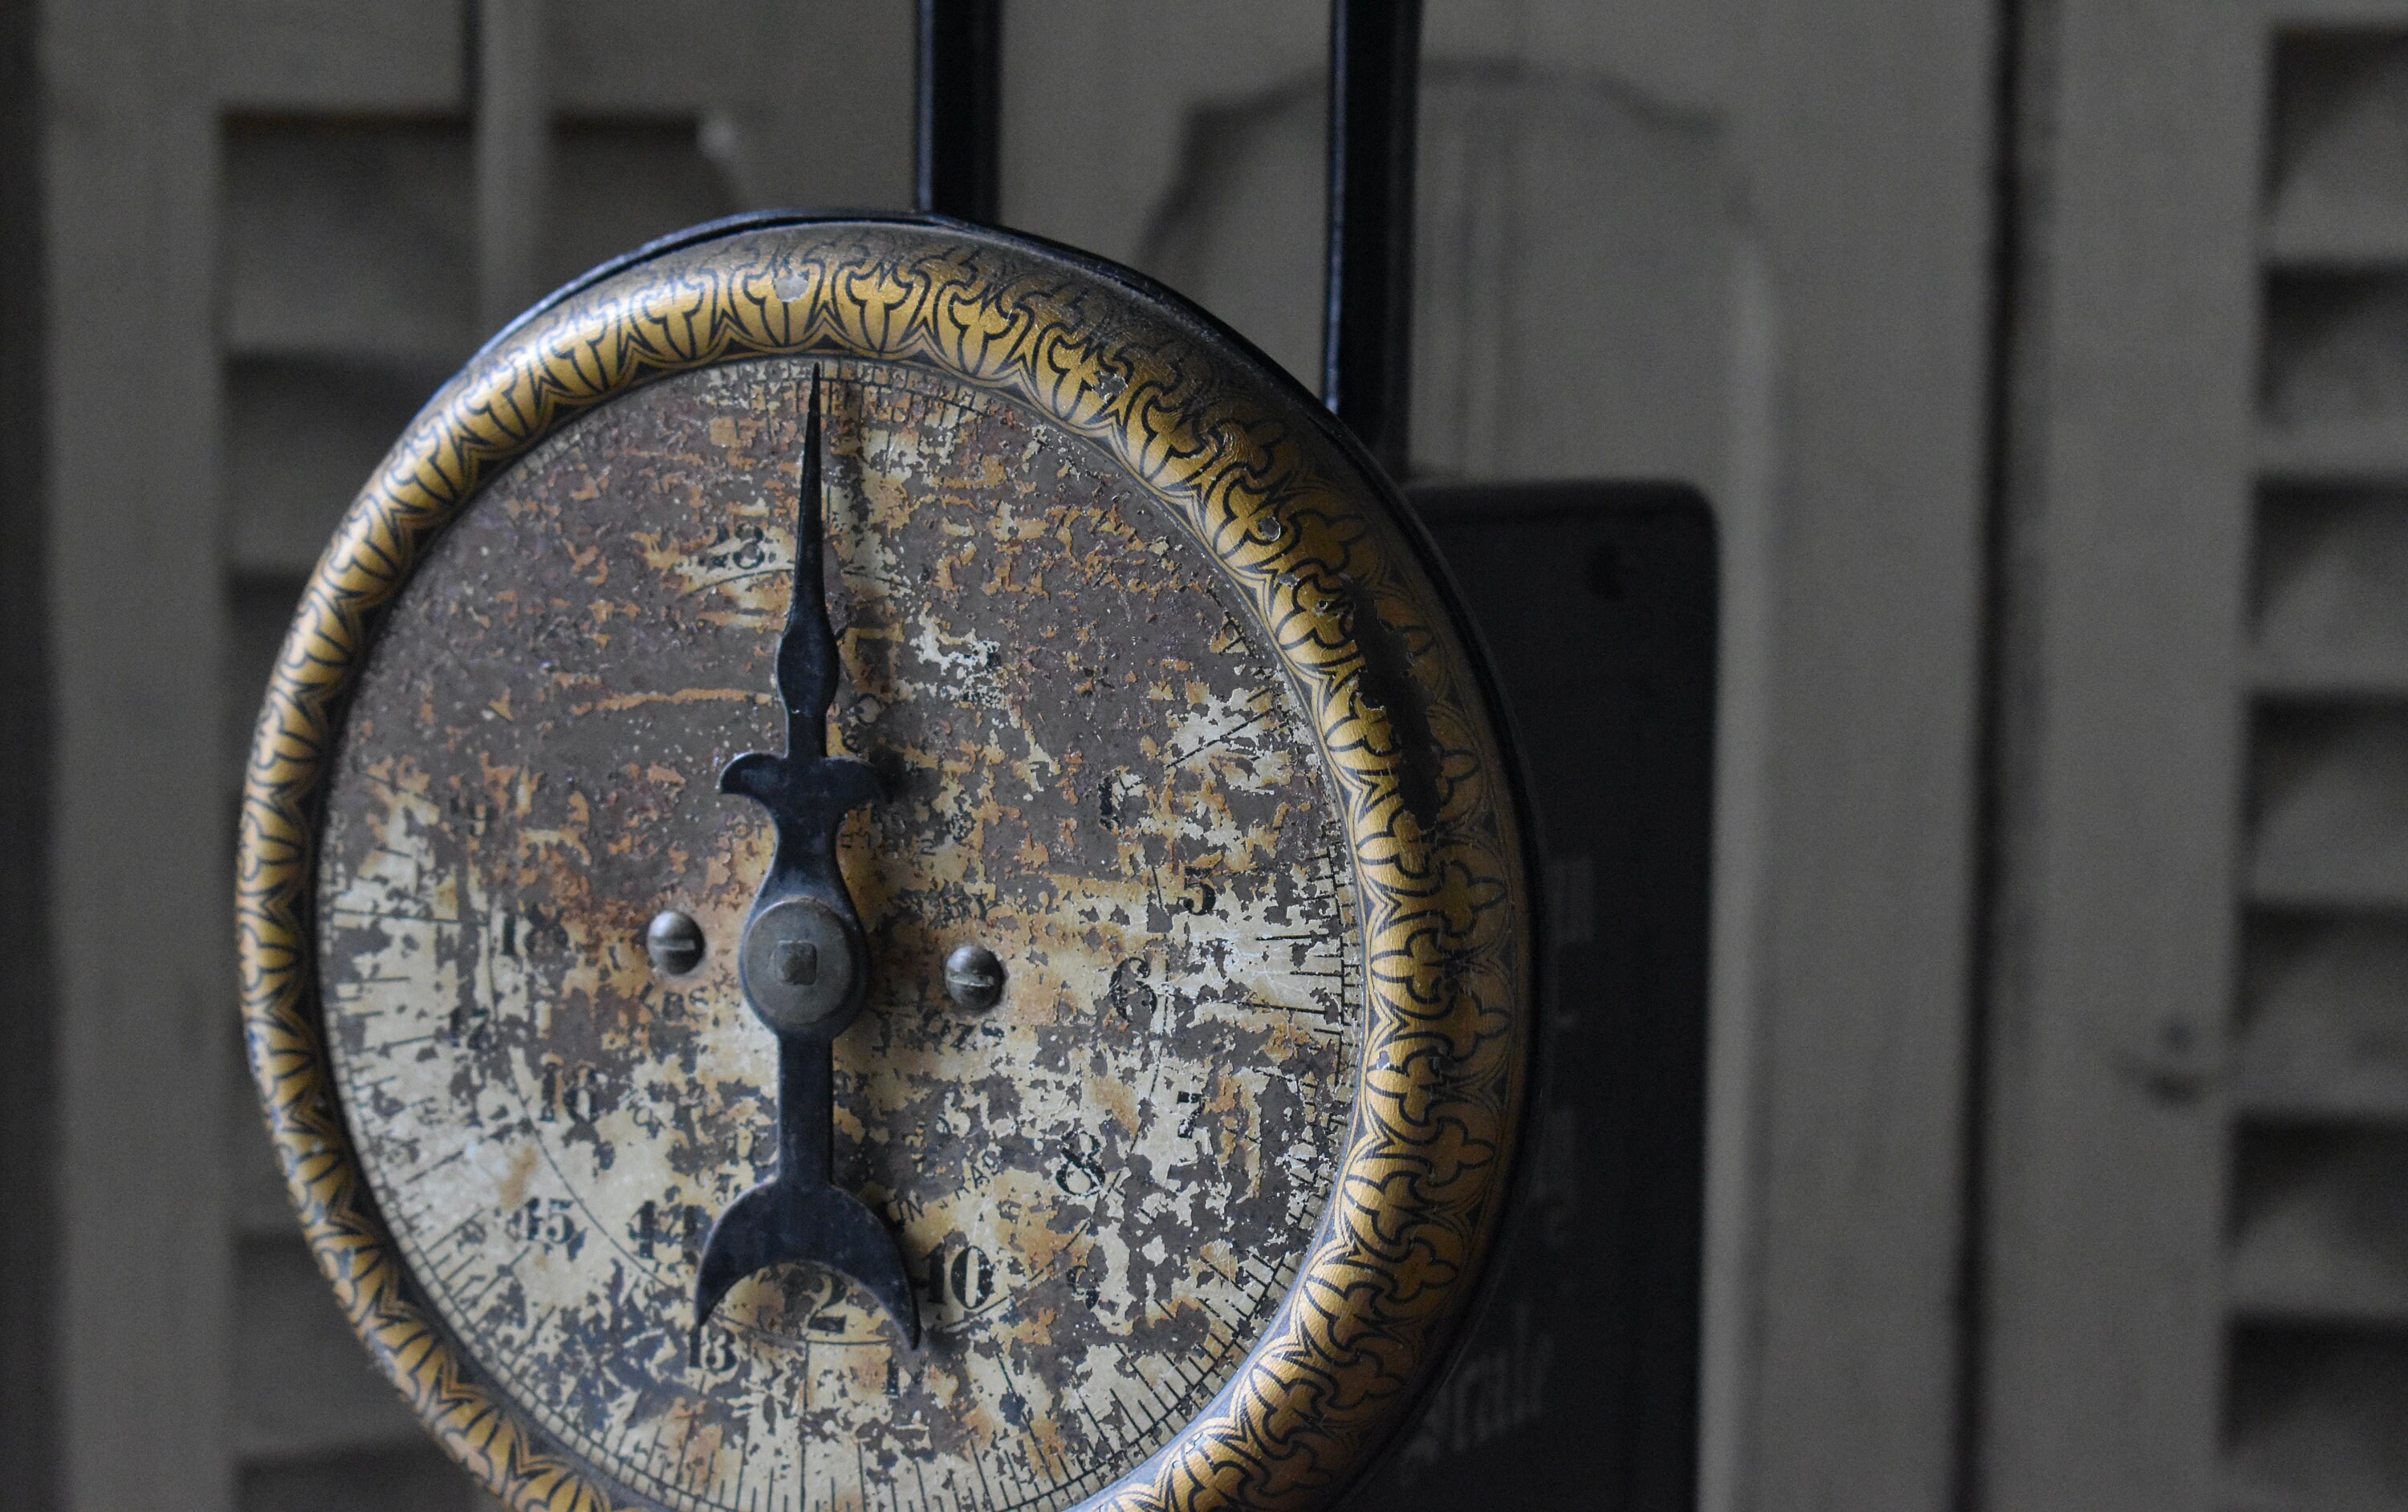 Antique Chondrometer / Grain Scale, Hanging Scale